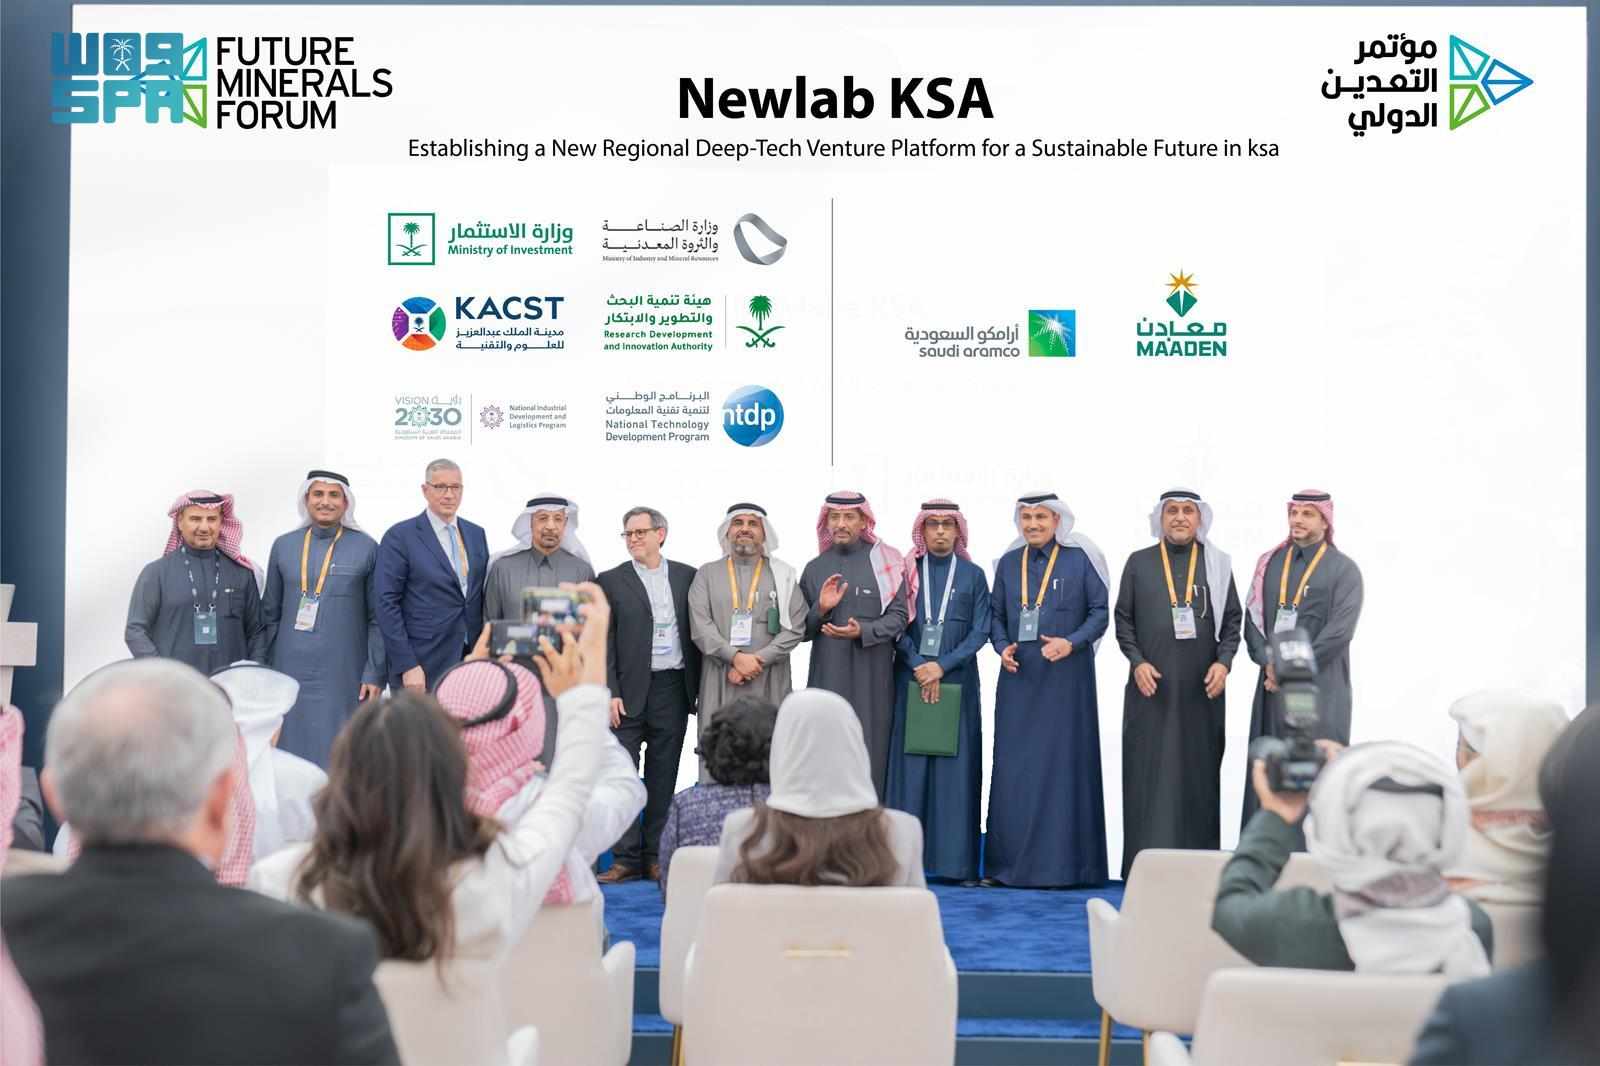 saudi,agreement,agency,nidlp,newlab